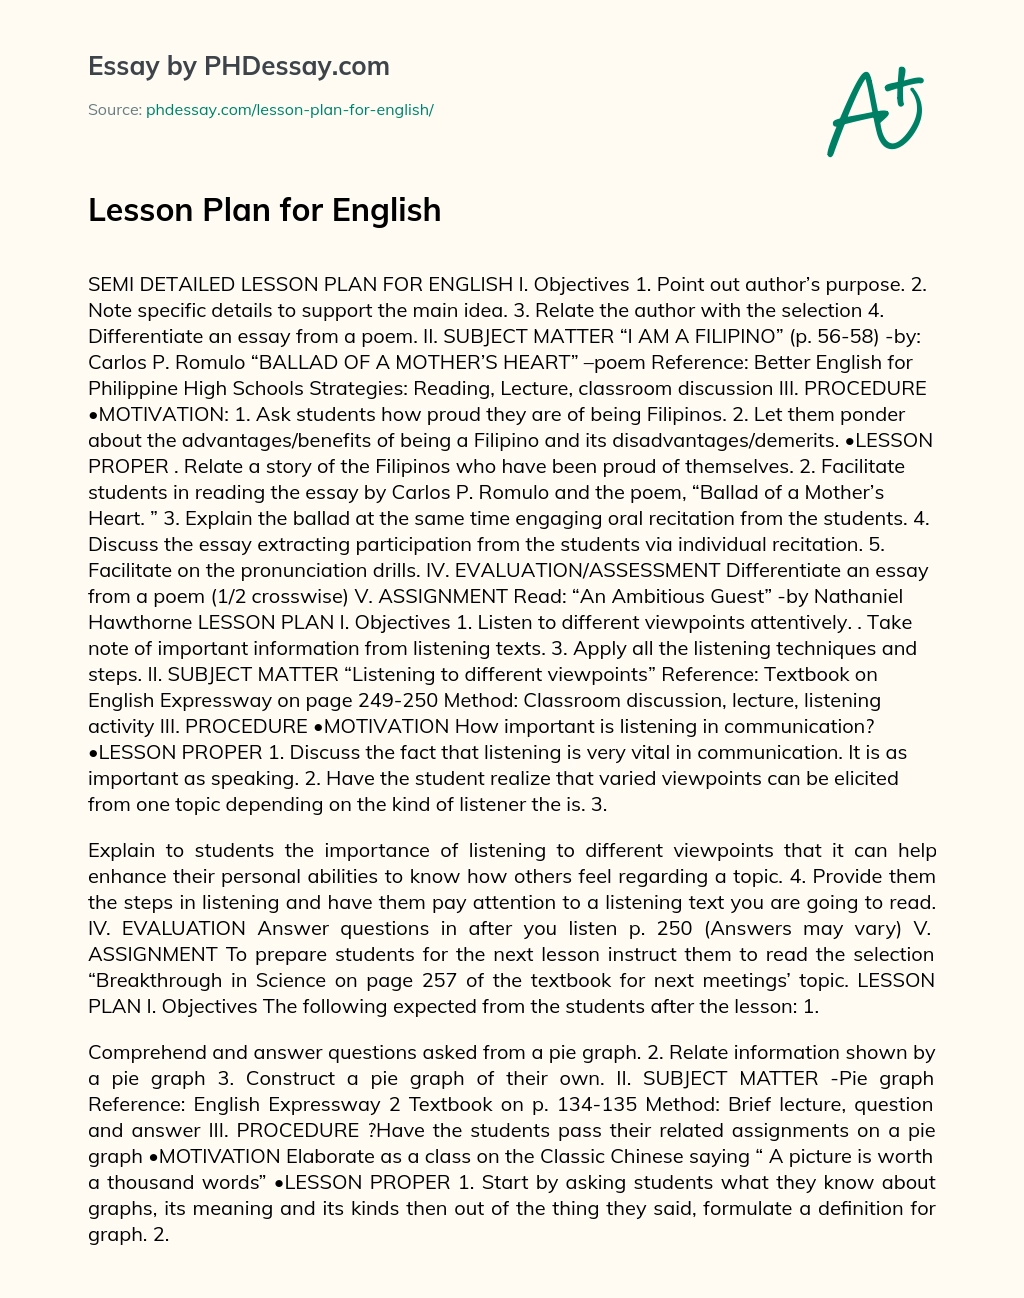 Lesson Plan for English essay